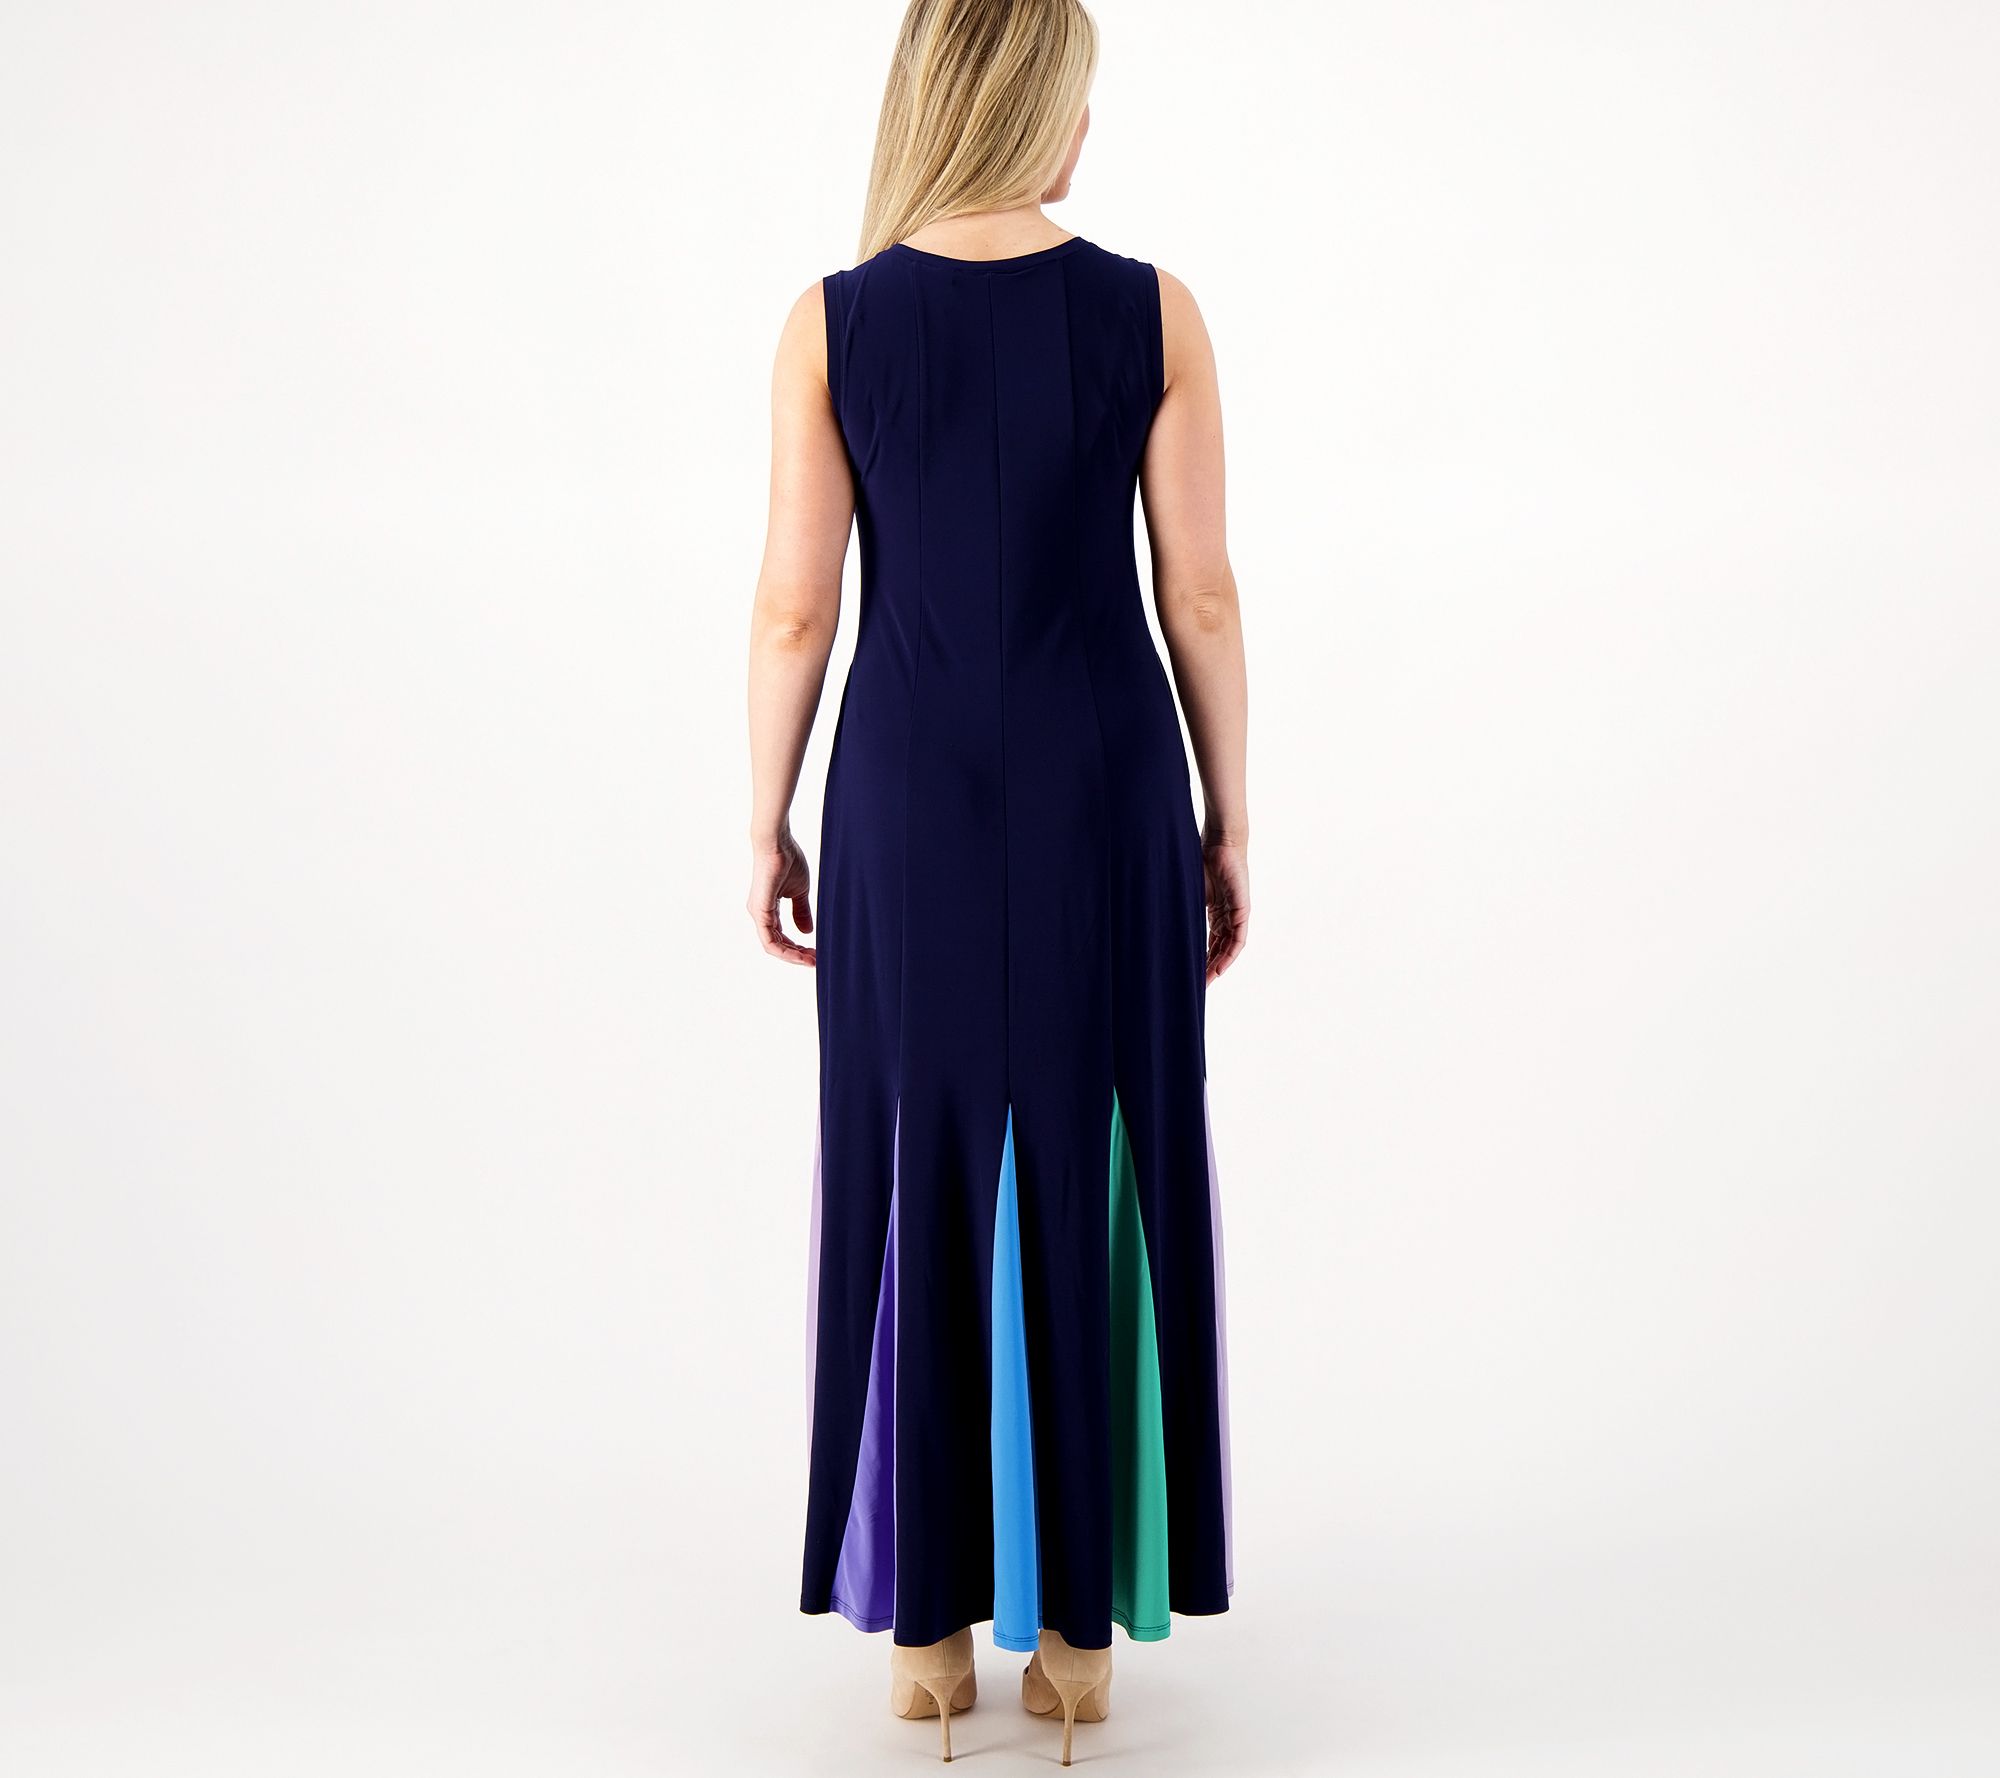 Attitudes by Renee Regular Rainbow Godet Maxi Dress - QVC.com